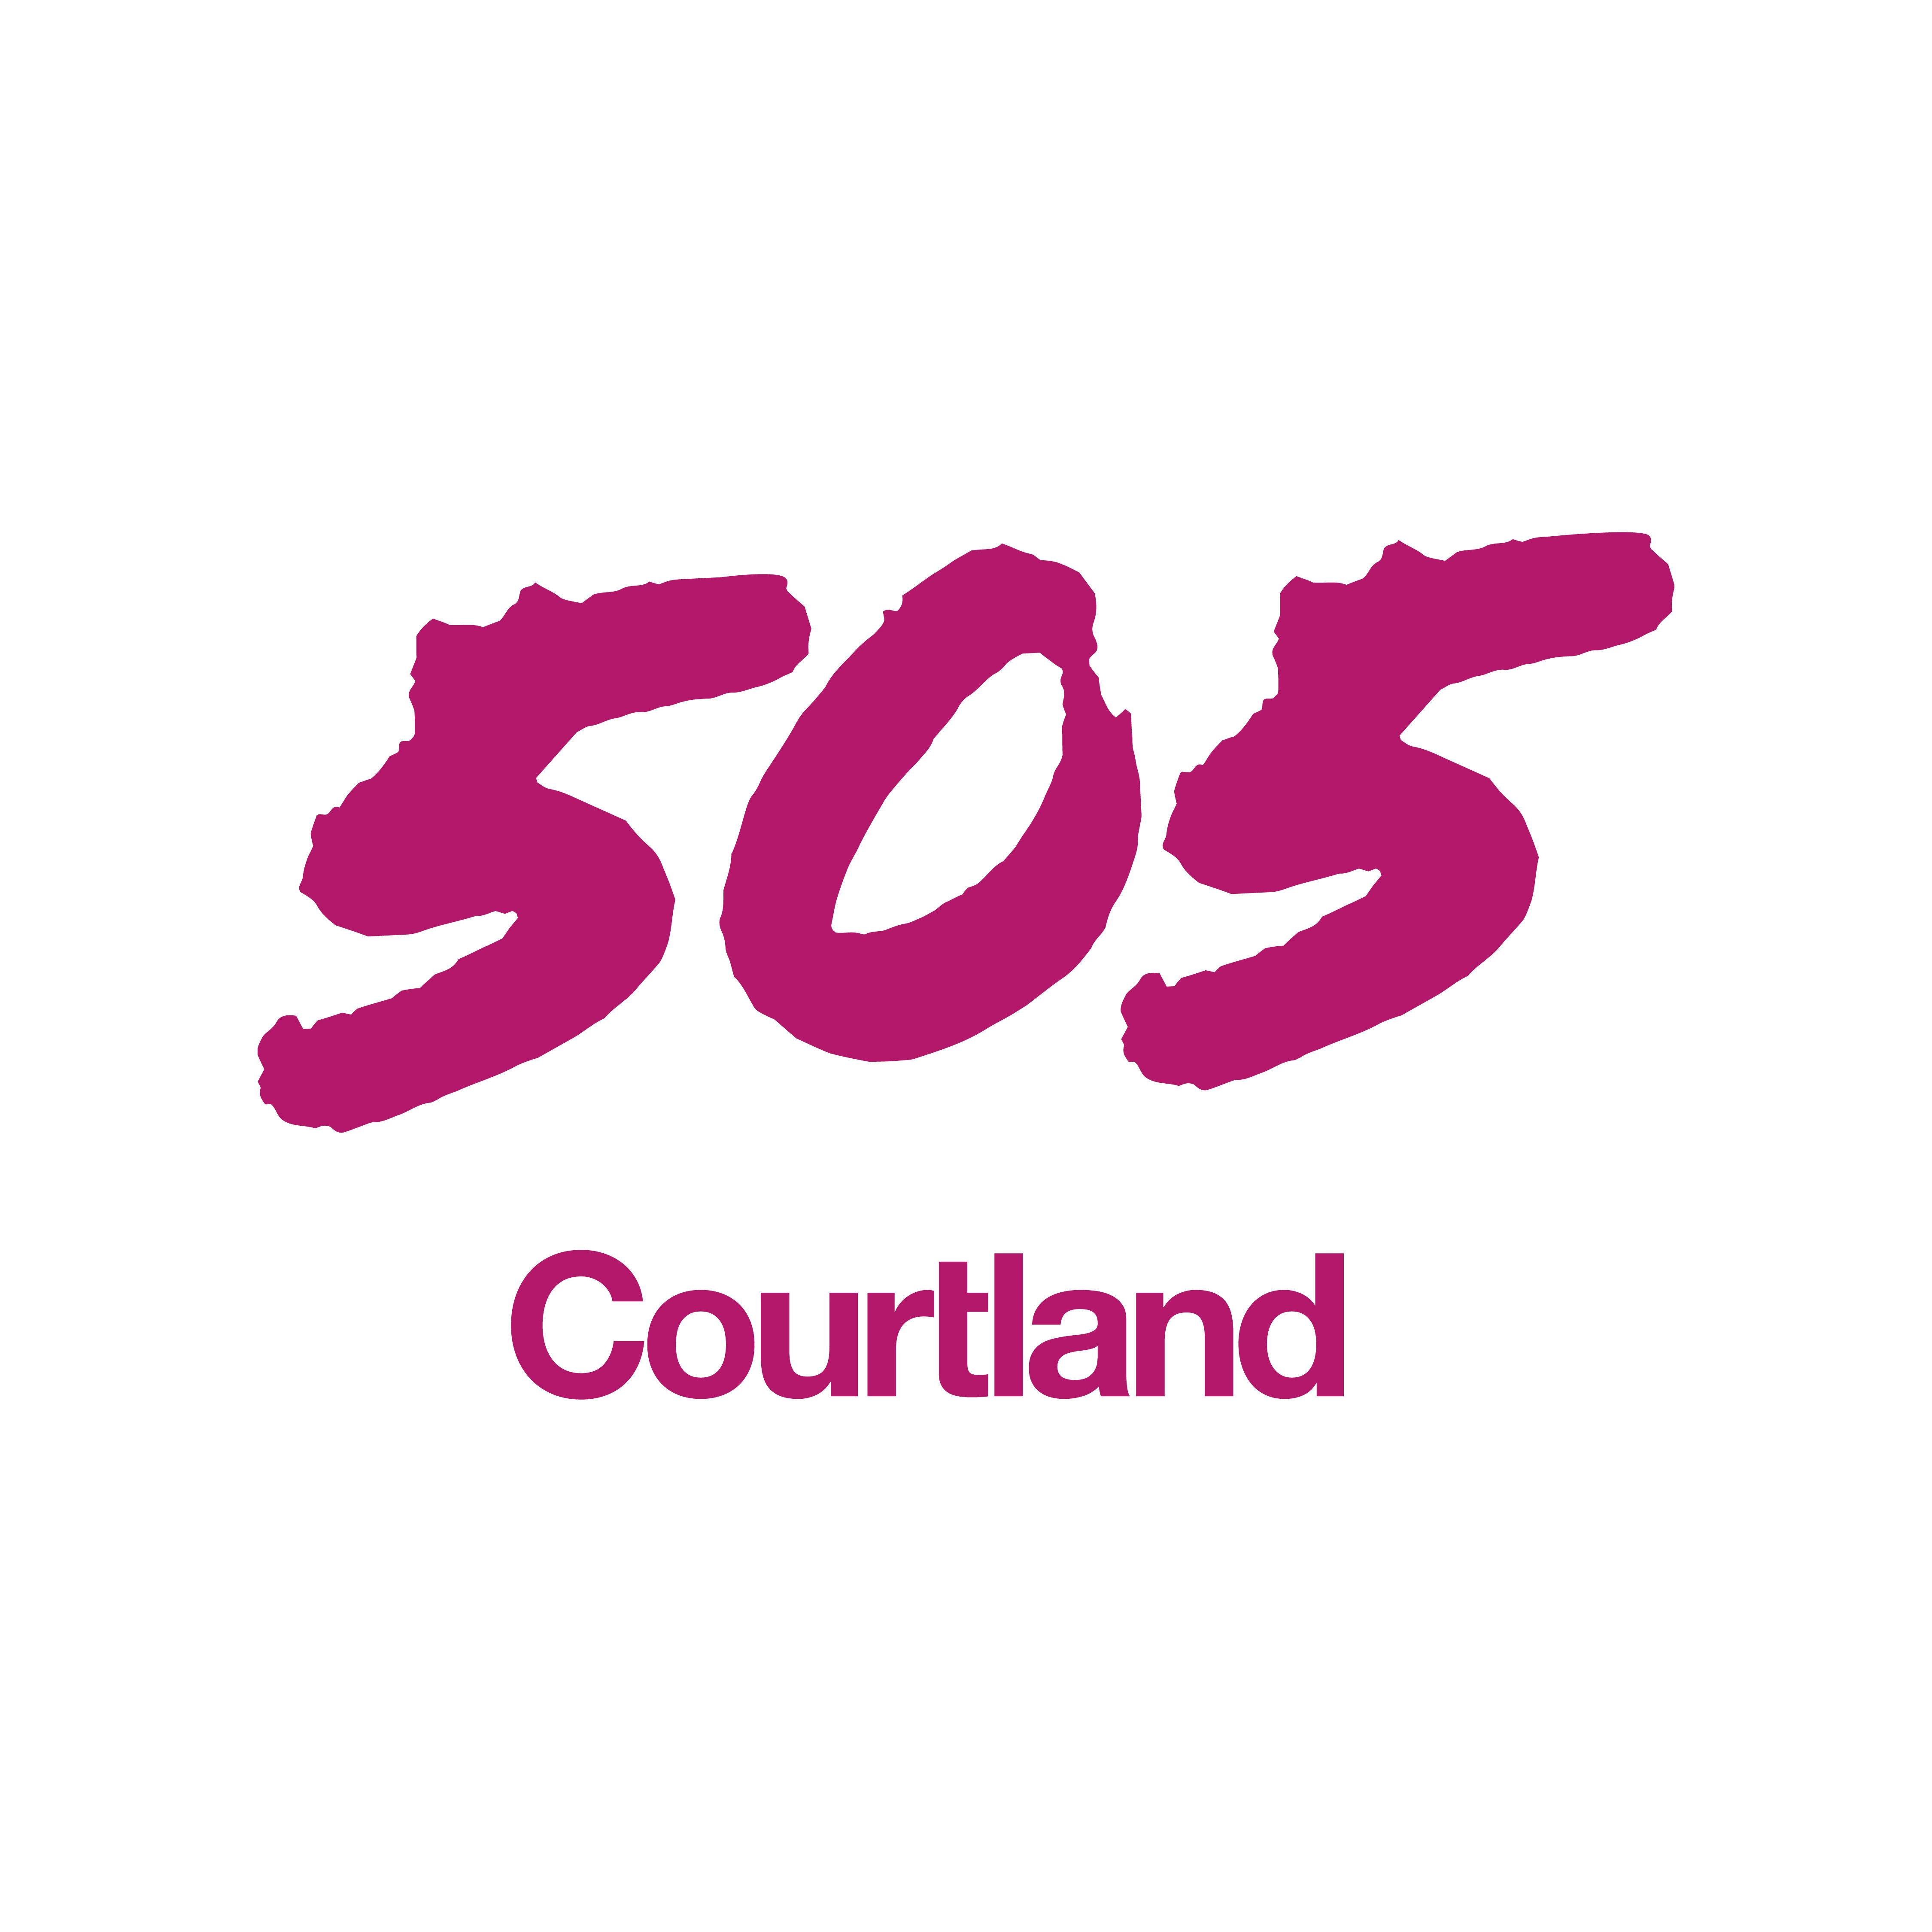 505 Courtland Apartments - Atlanta, GA 30308 - (470)761-4272 | ShowMeLocal.com